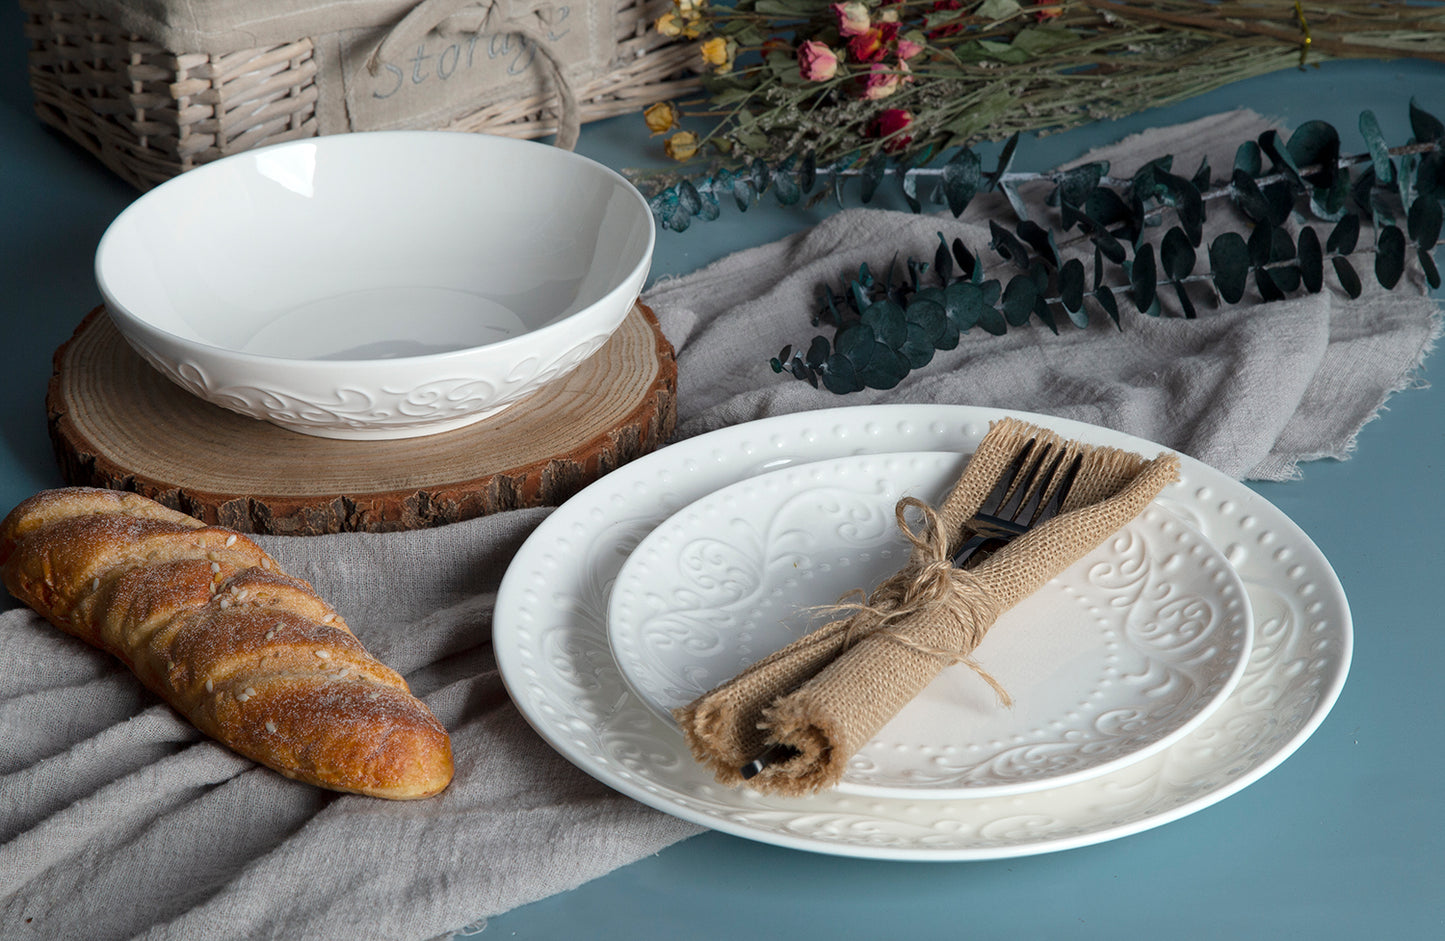 New bone china tableware around rattan edges | Item NO.: 490D-002